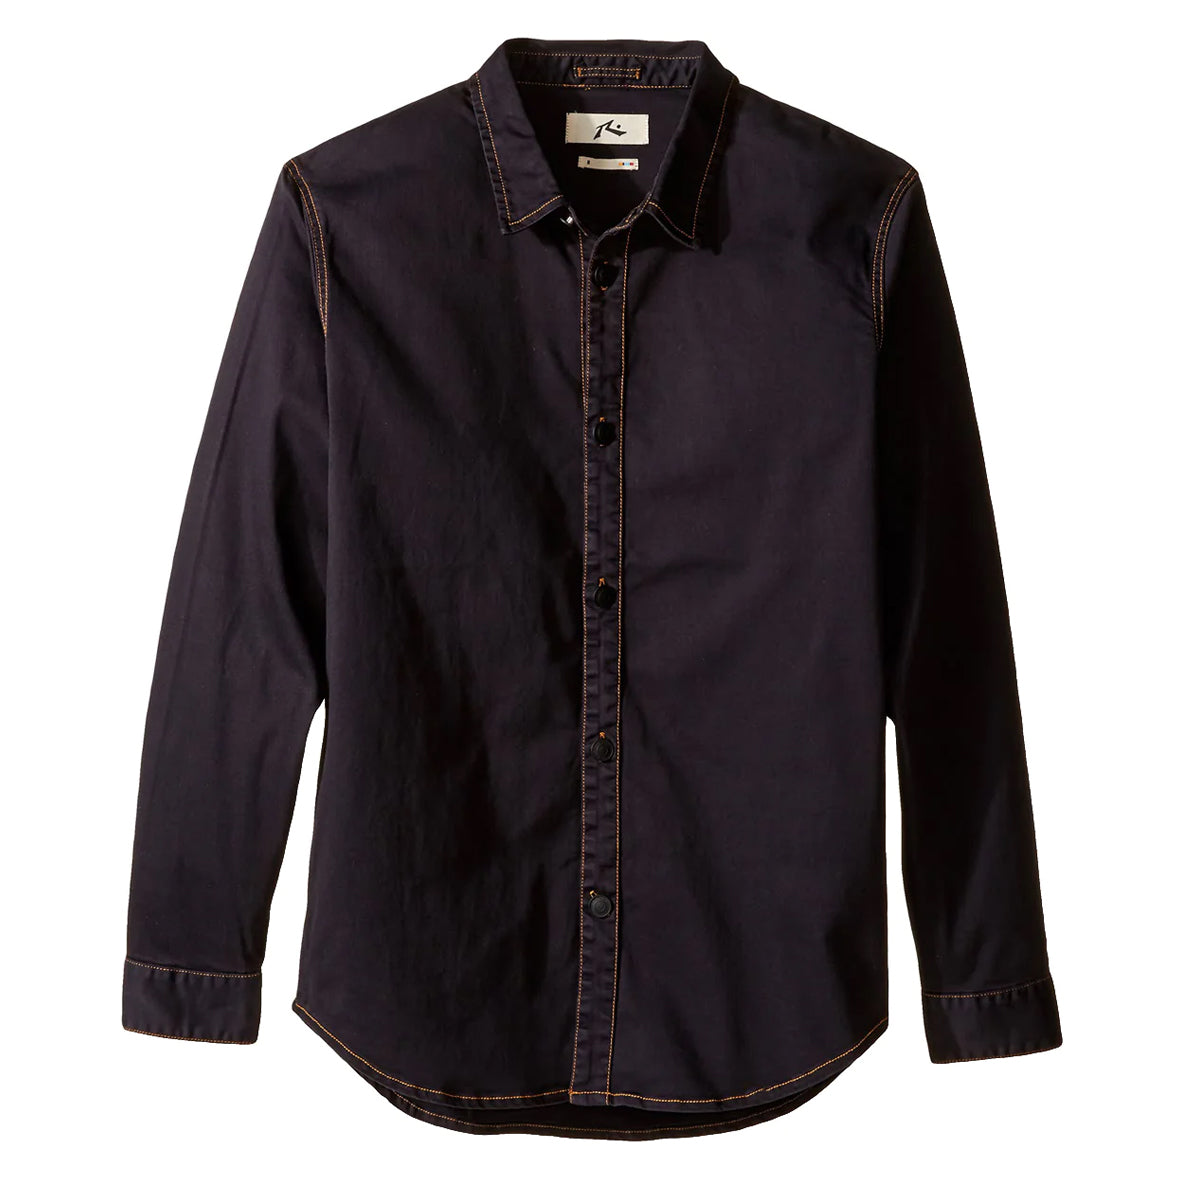 Rusty Black Jack Men's Button Up Long-Sleeve Shirts 